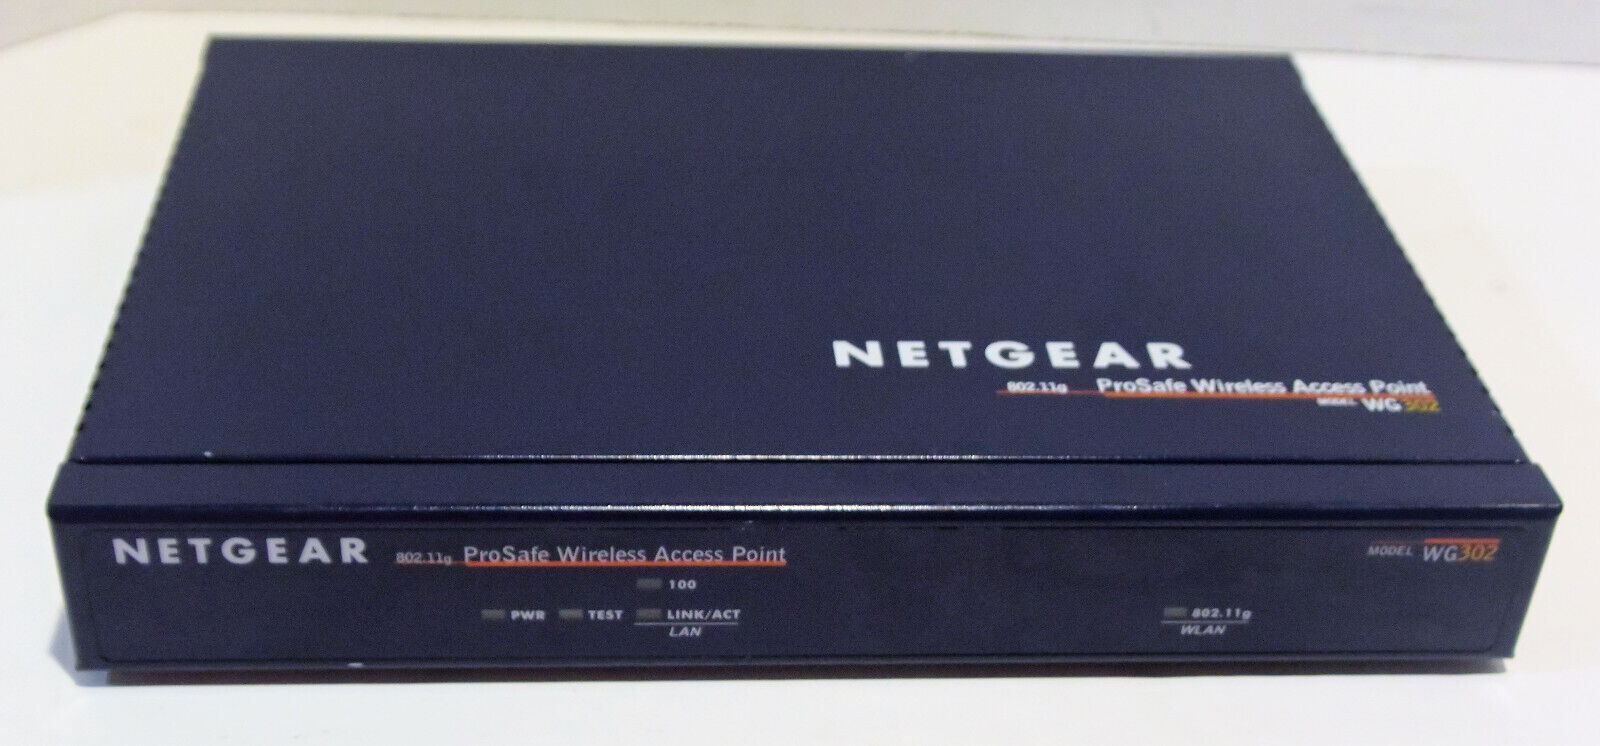 NETGEAR 802.11g ProSafe Wireless Access Point WG302